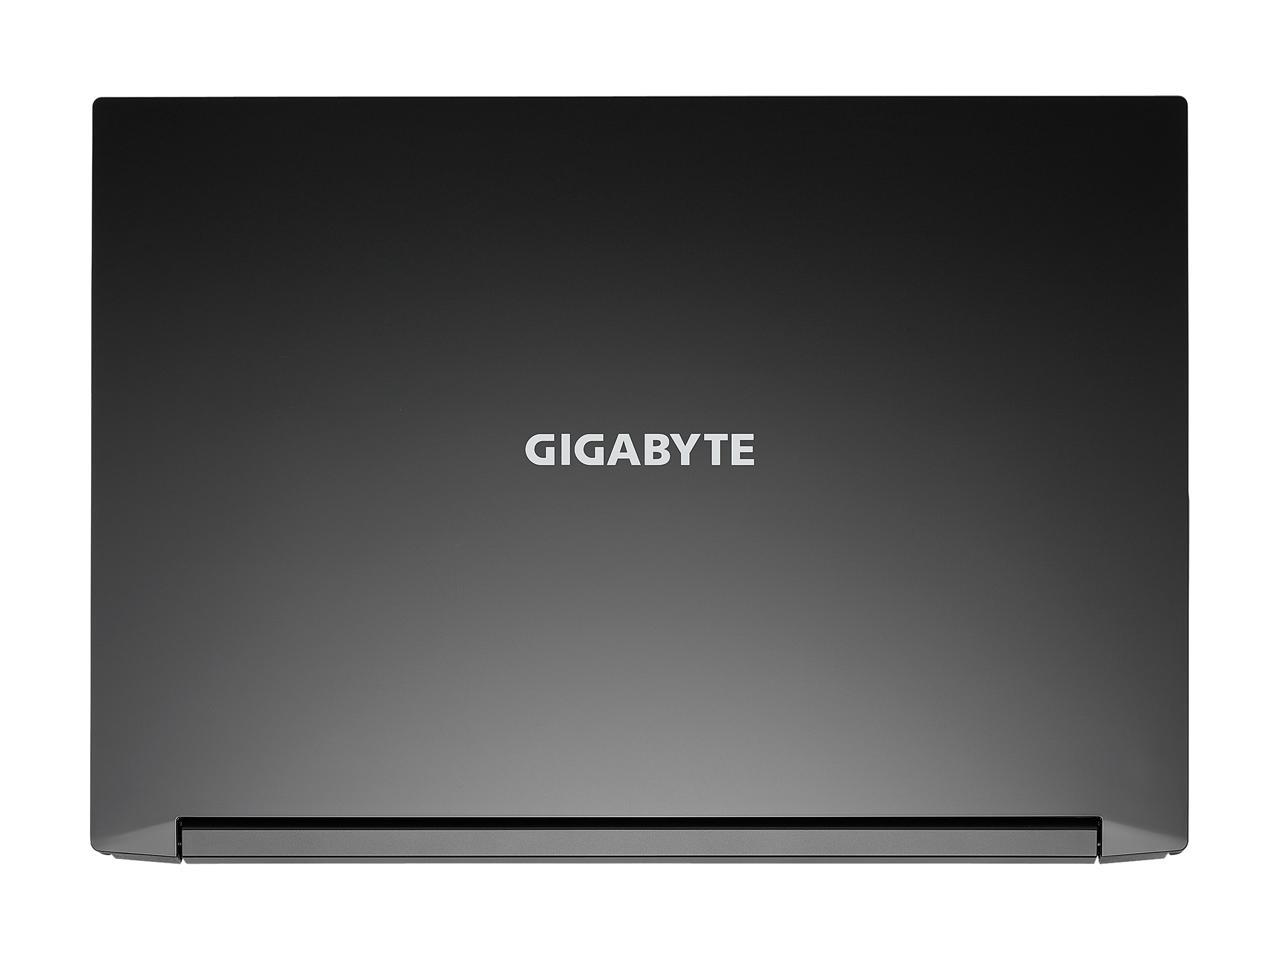 Gigabyte G5 Kc - 15.6" Fhd Ips Anti-Glare 144Hz - Intel Core I5-10500H - Nvidia Geforce Rtx 3060